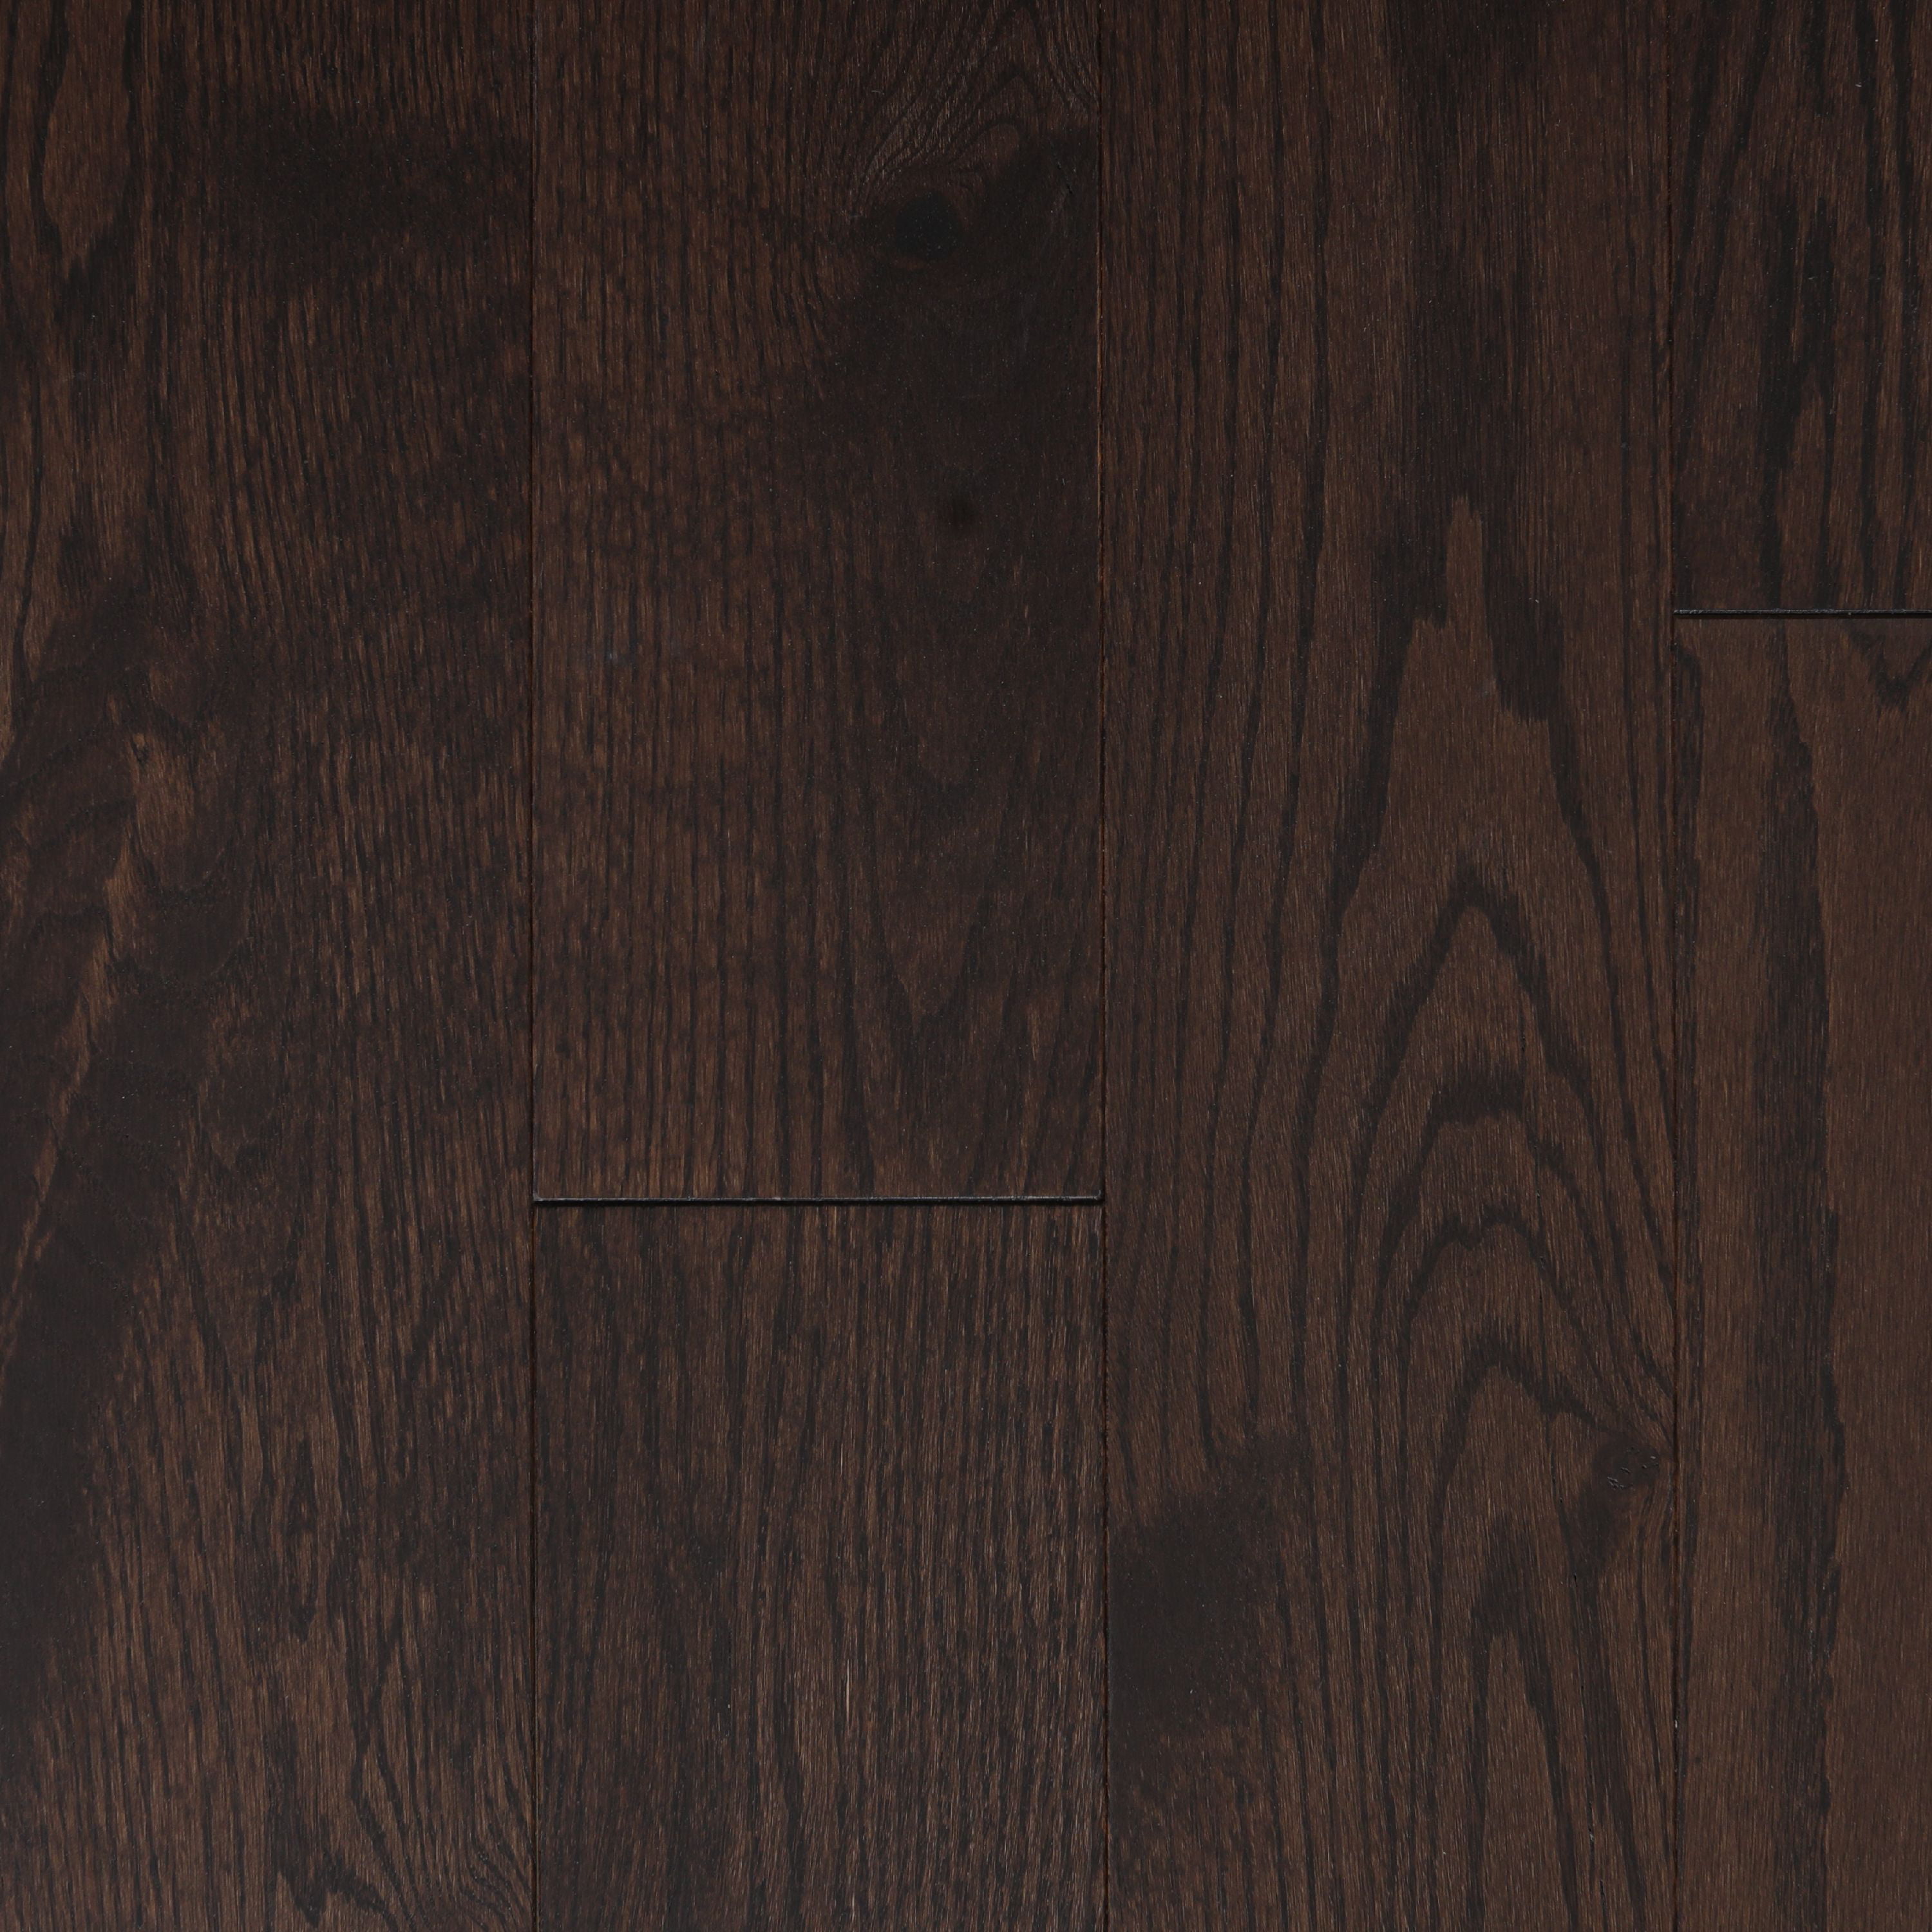 Albuquerque Collection Engineered, 1 1 2 Inch Hardwood Flooring